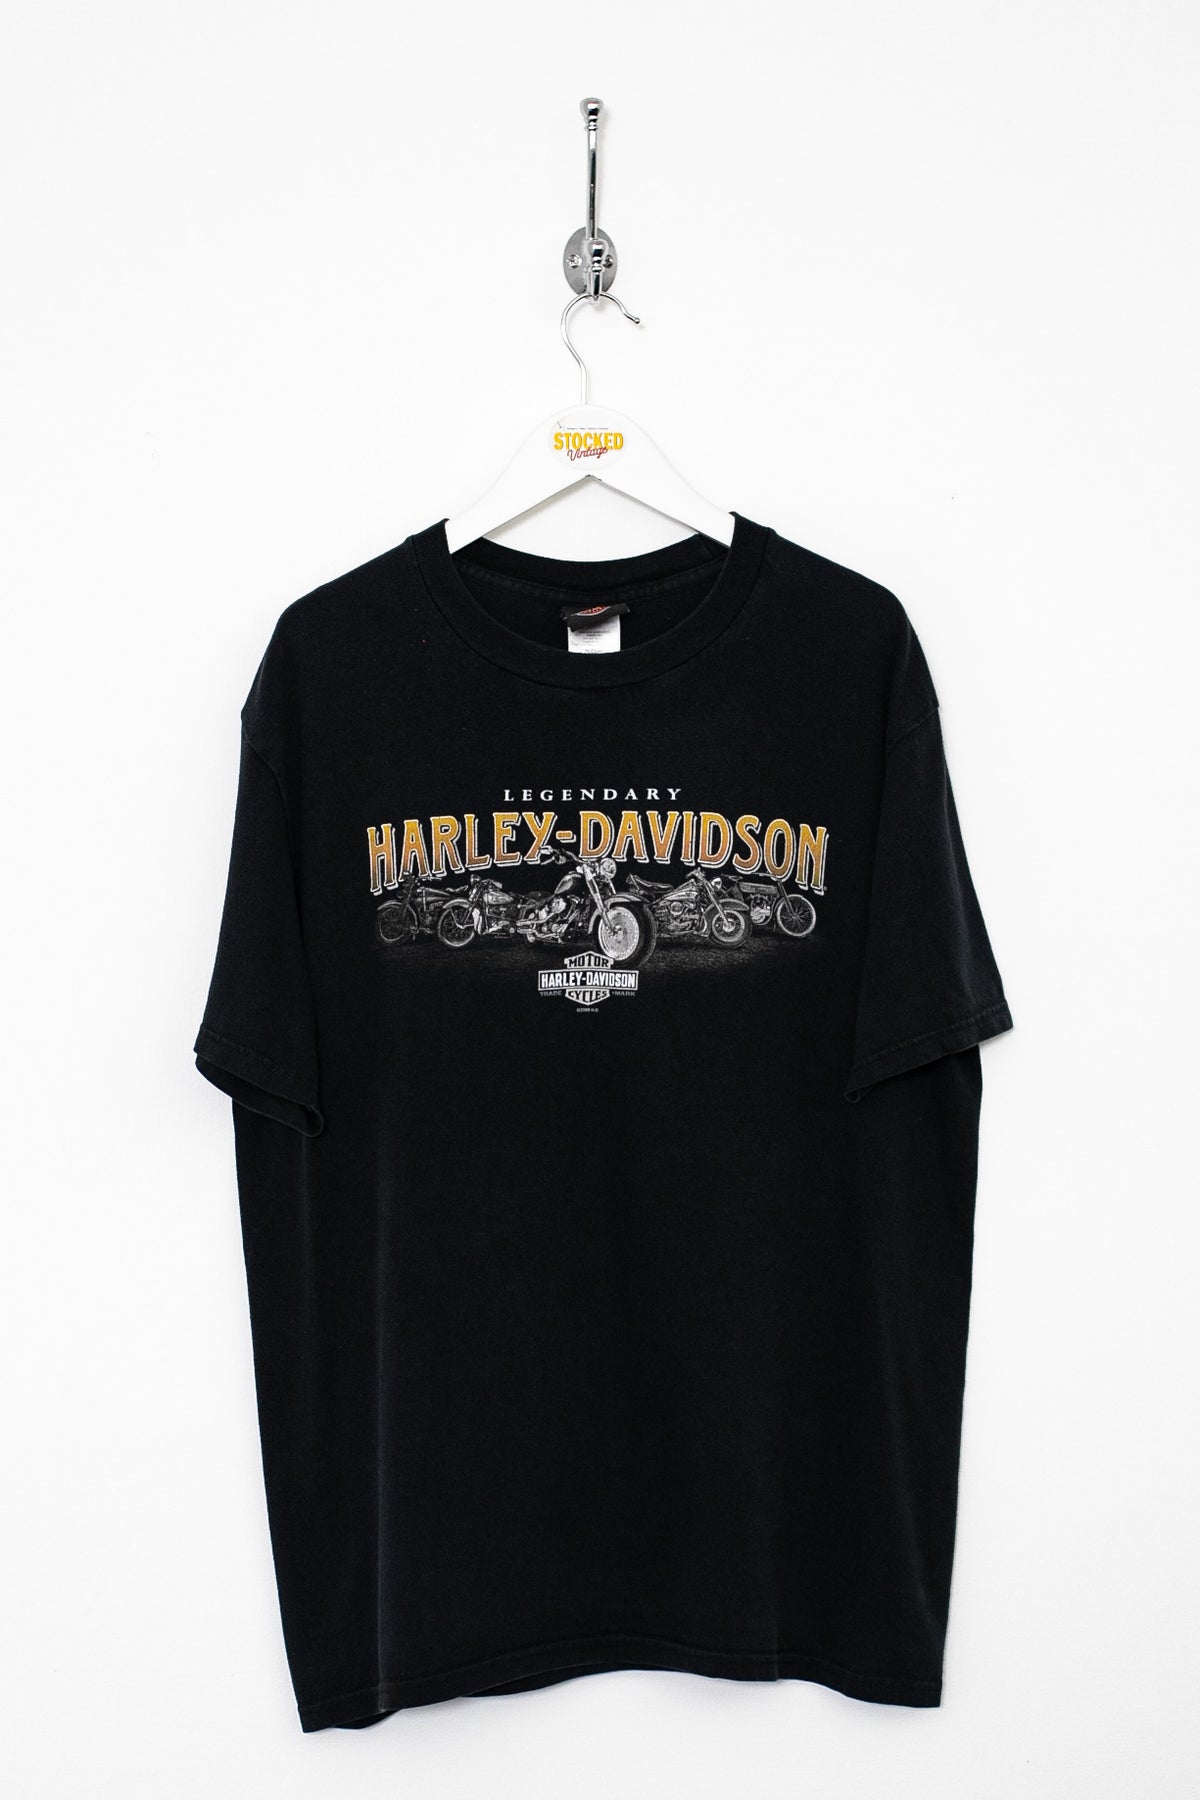 00s Harley Davidson Graphic Tee (M)